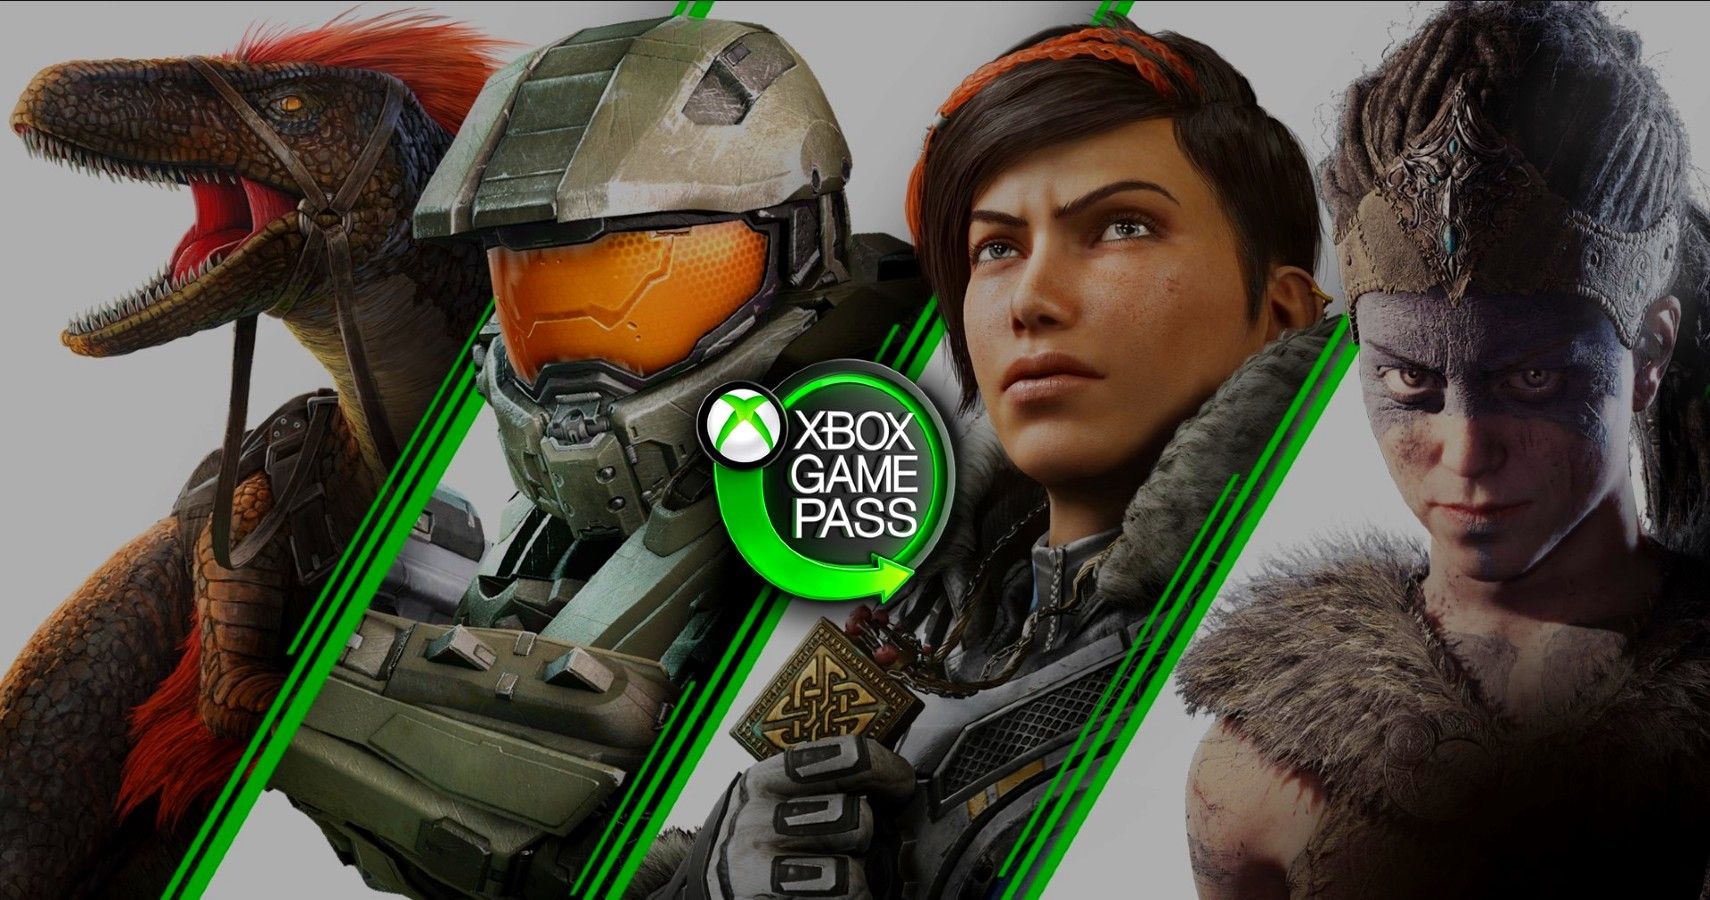 Xbox Game Pass Microsoft